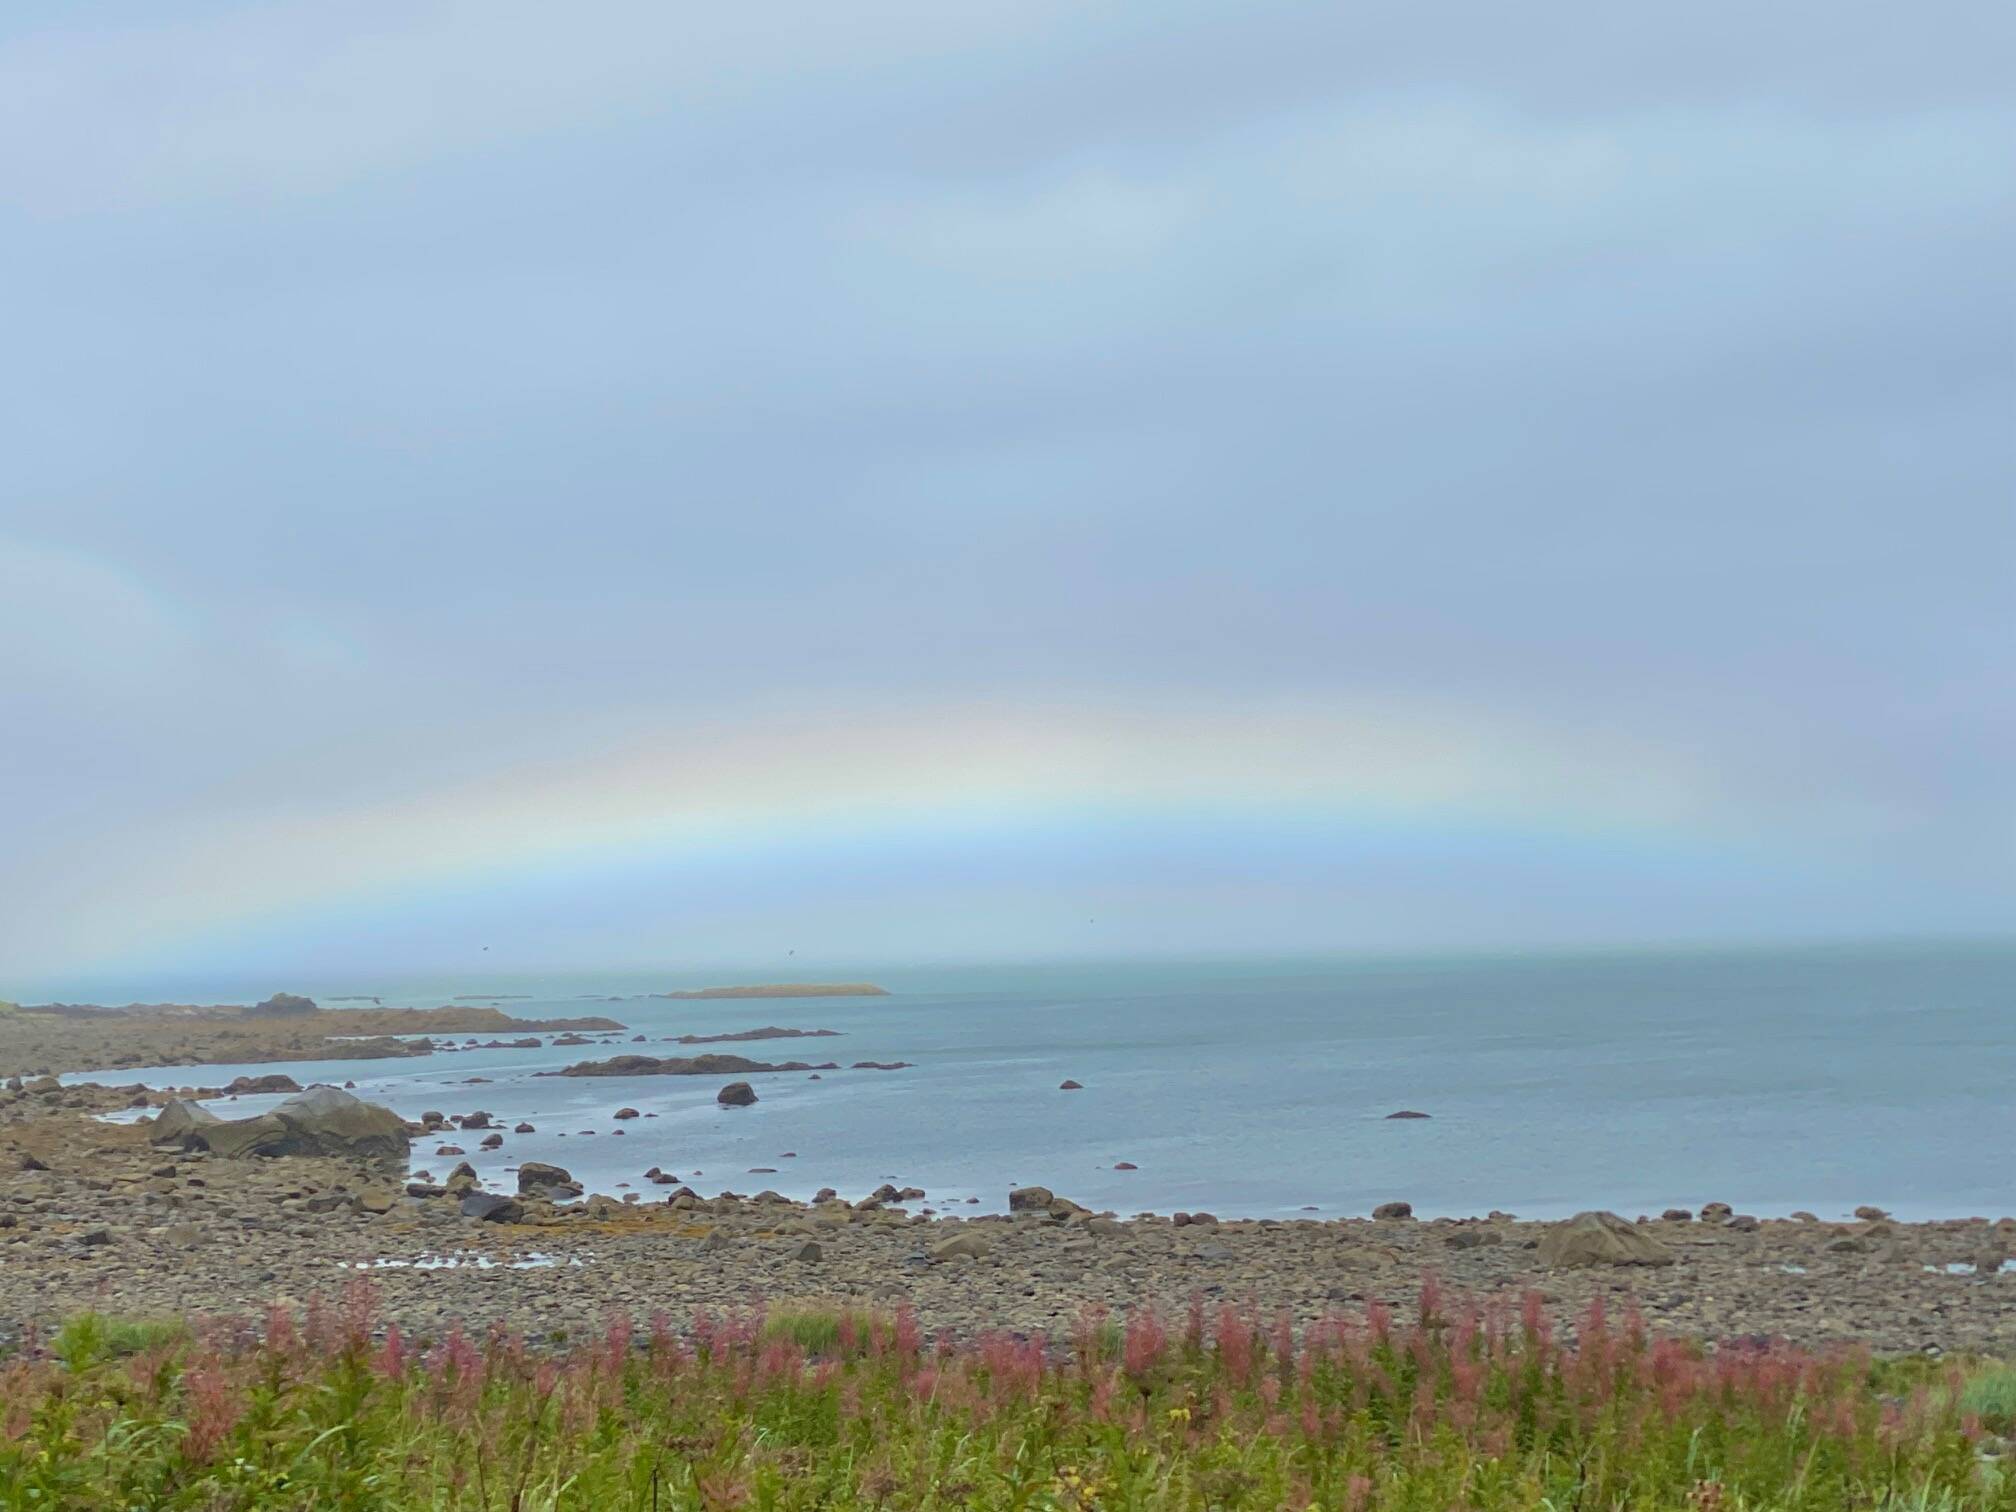 Rainbow across the cove at Blue Mussel Beach on Aug. 16. (Photo by Denise Carroll)